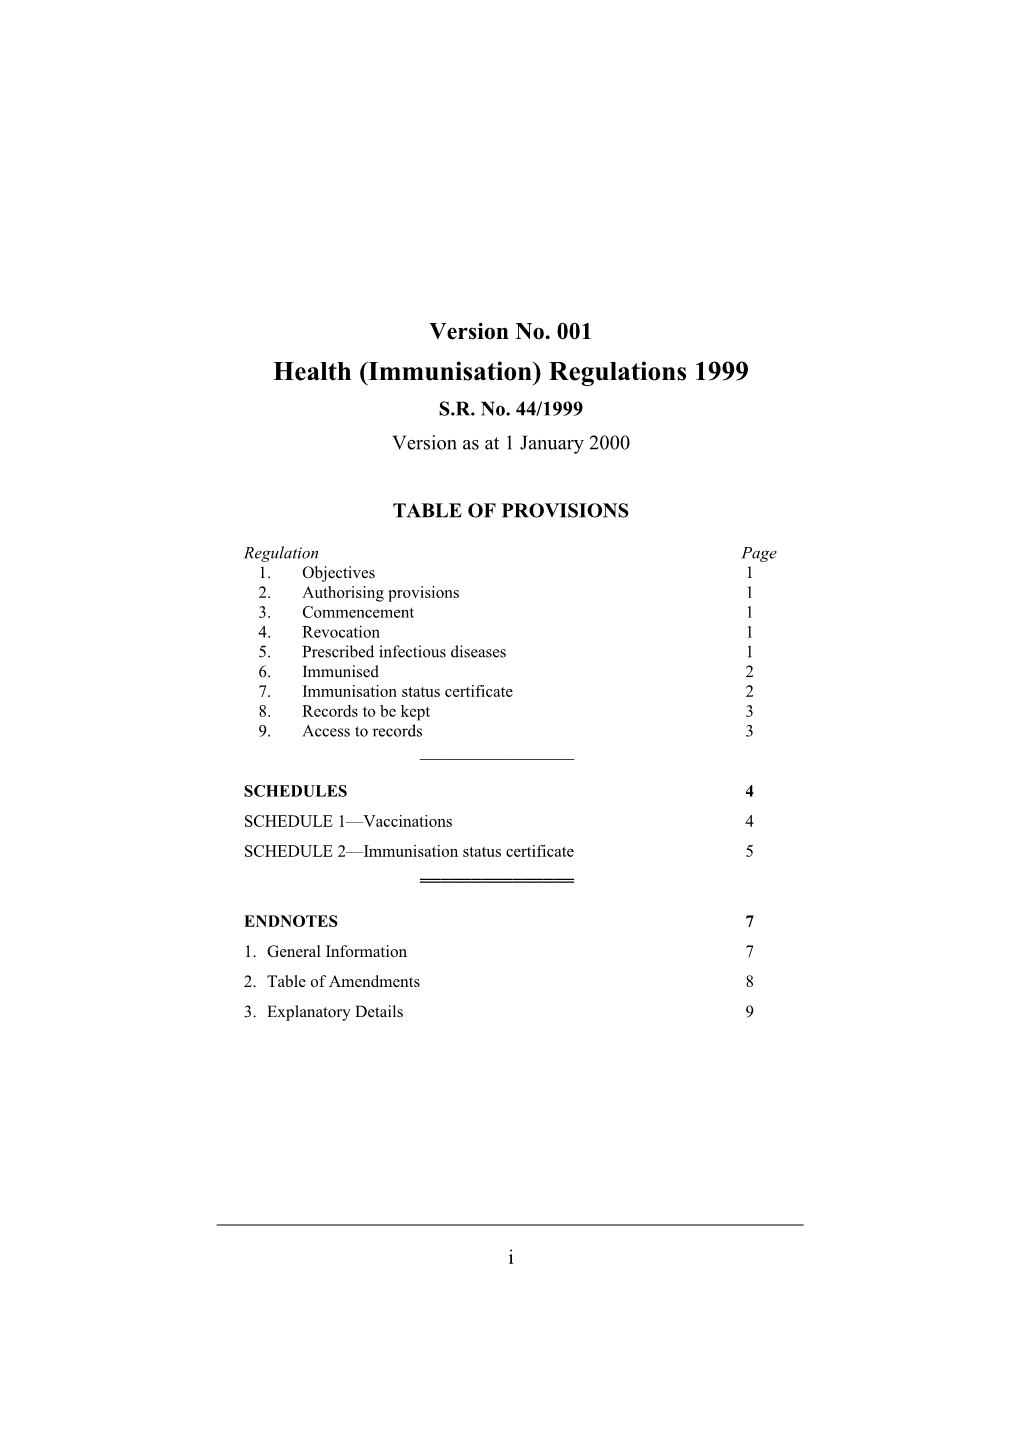 Health (Immunisation) Regulations 1999